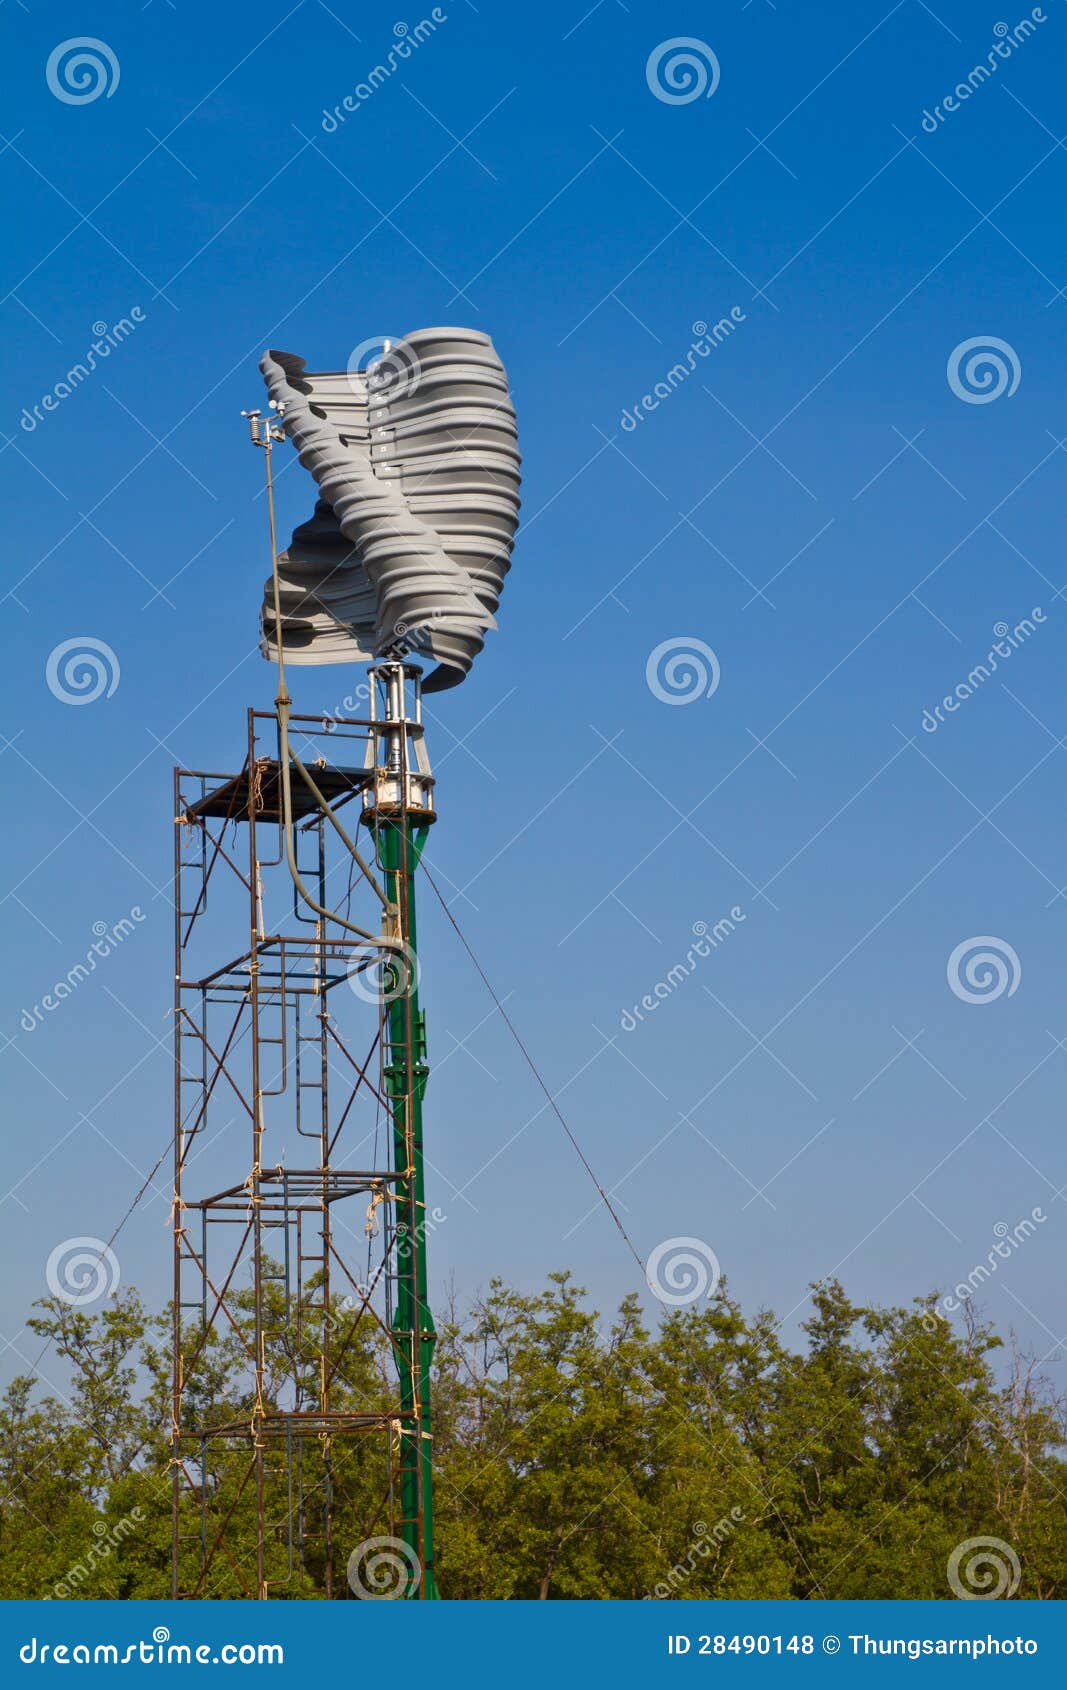 Vertical wind turbine under construction against blue sky.